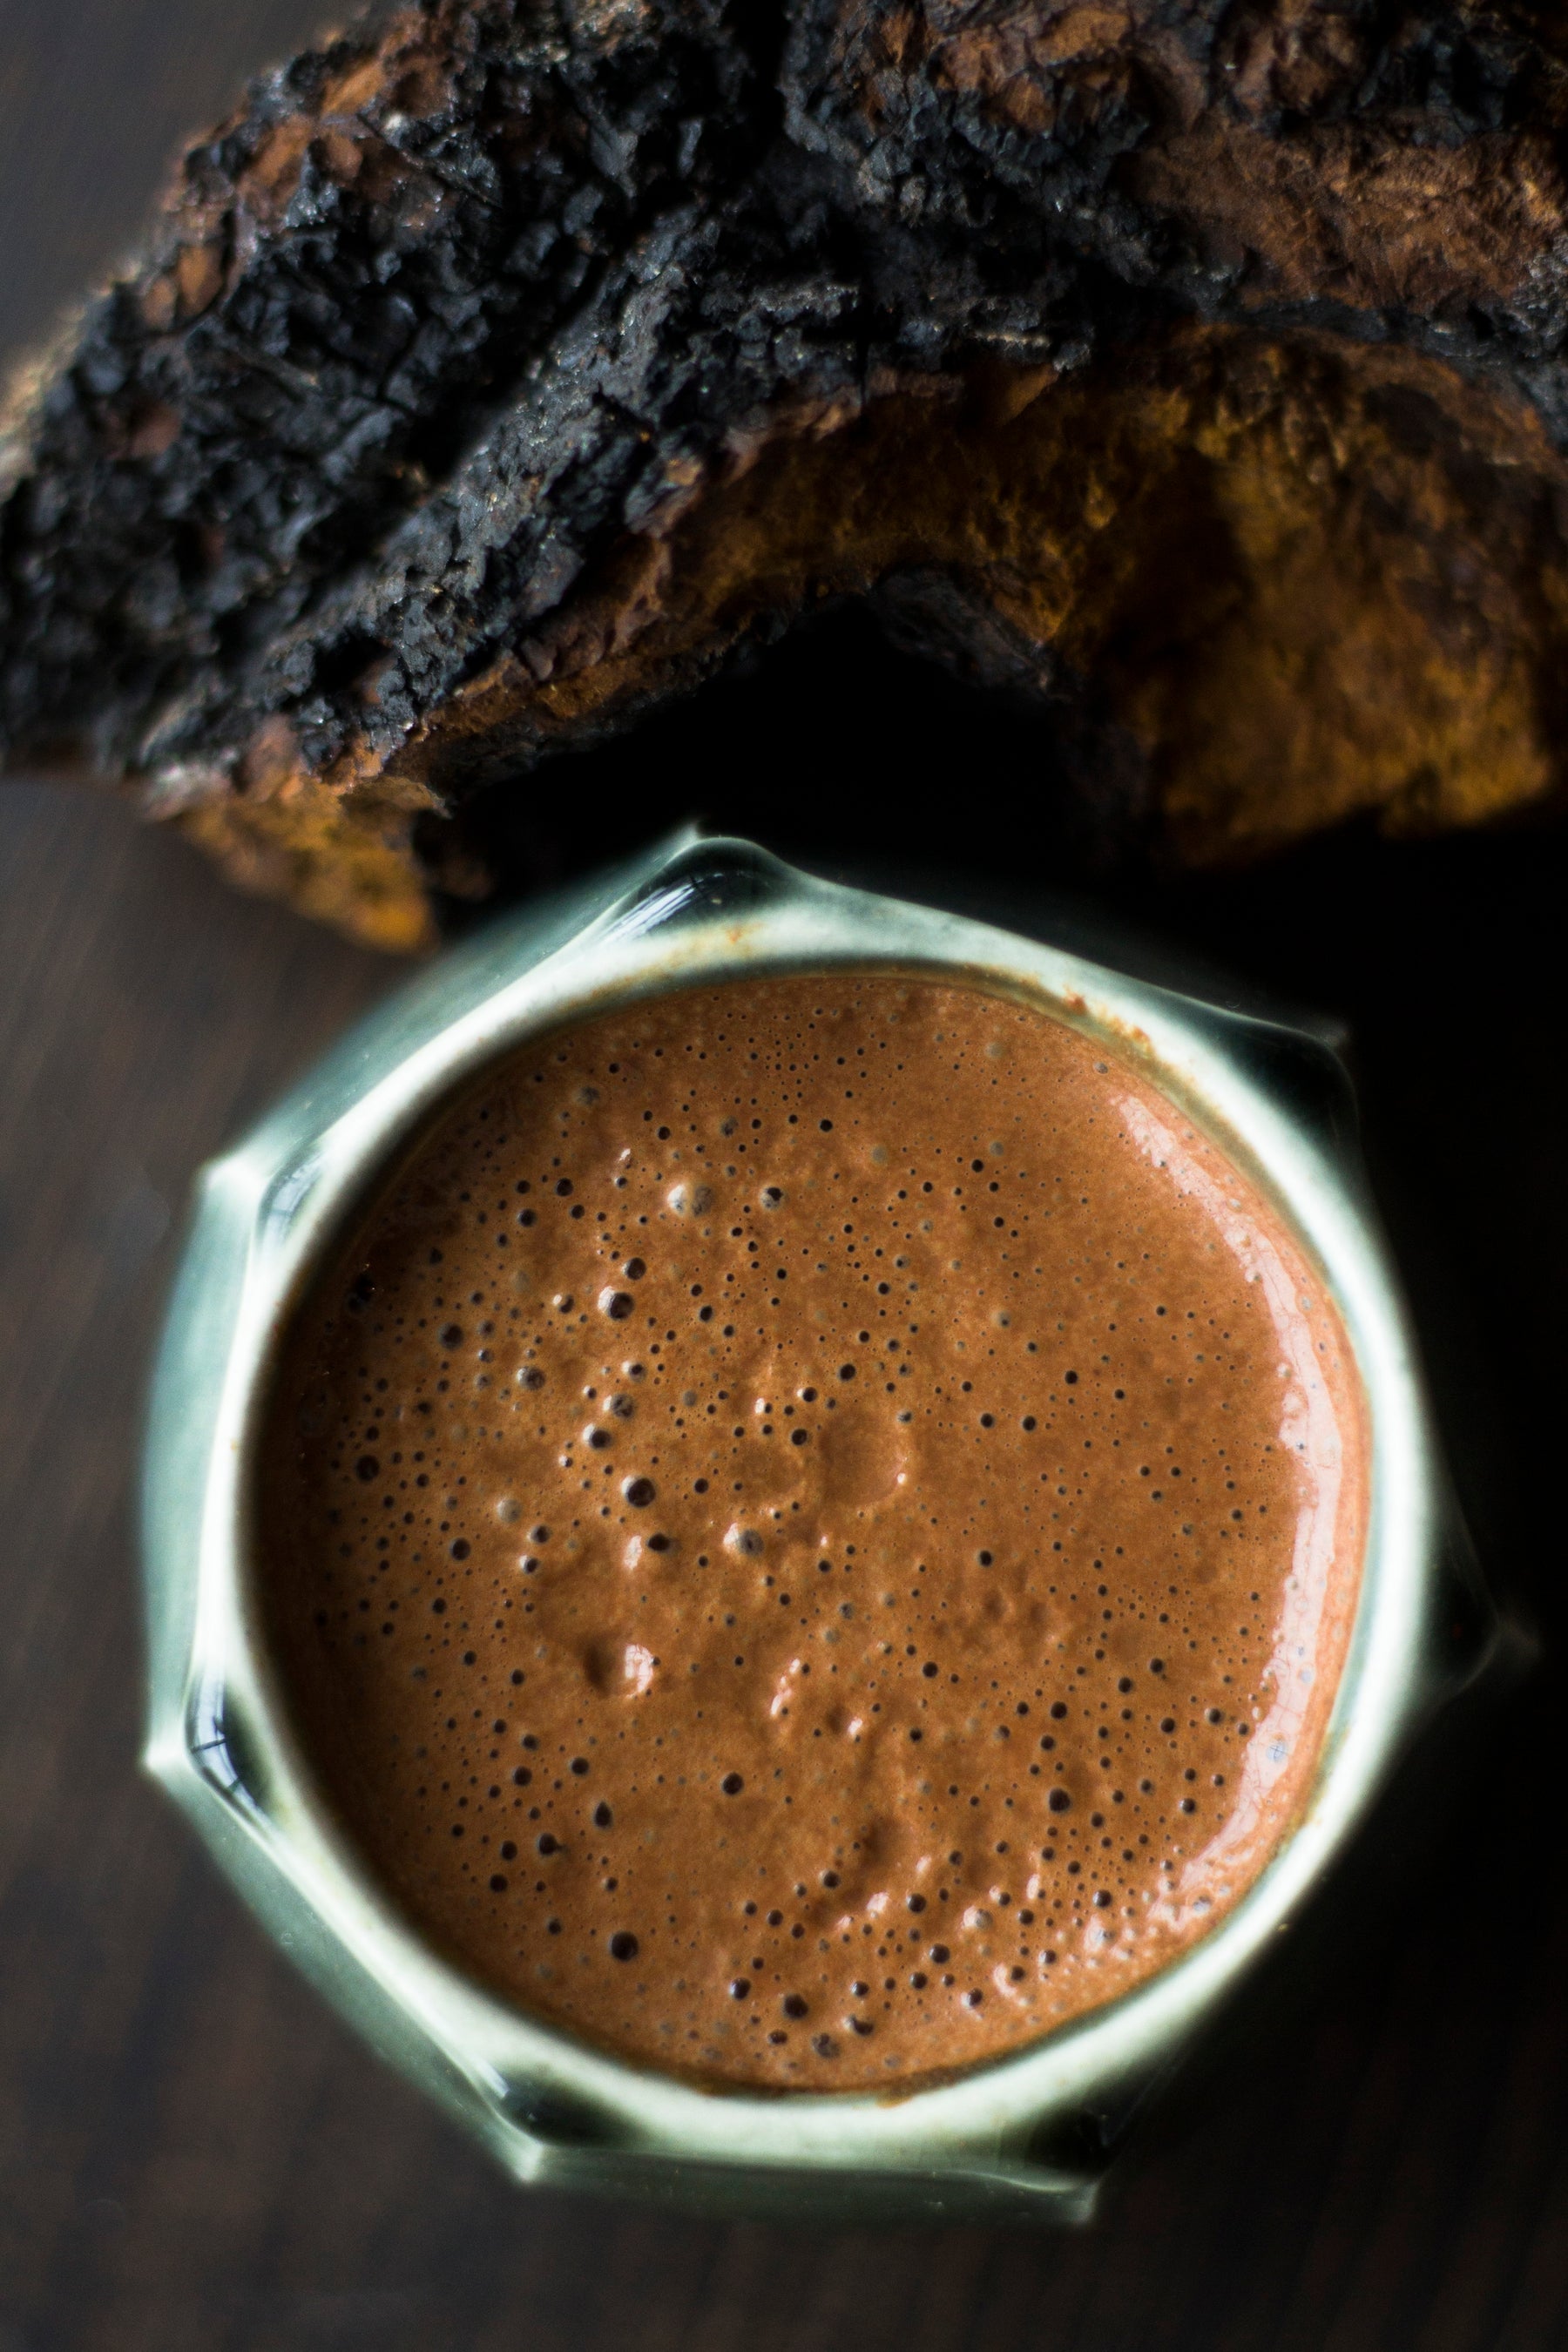 Chaga Hot Chocolate Elixir Mix -30 Chocolate Pods